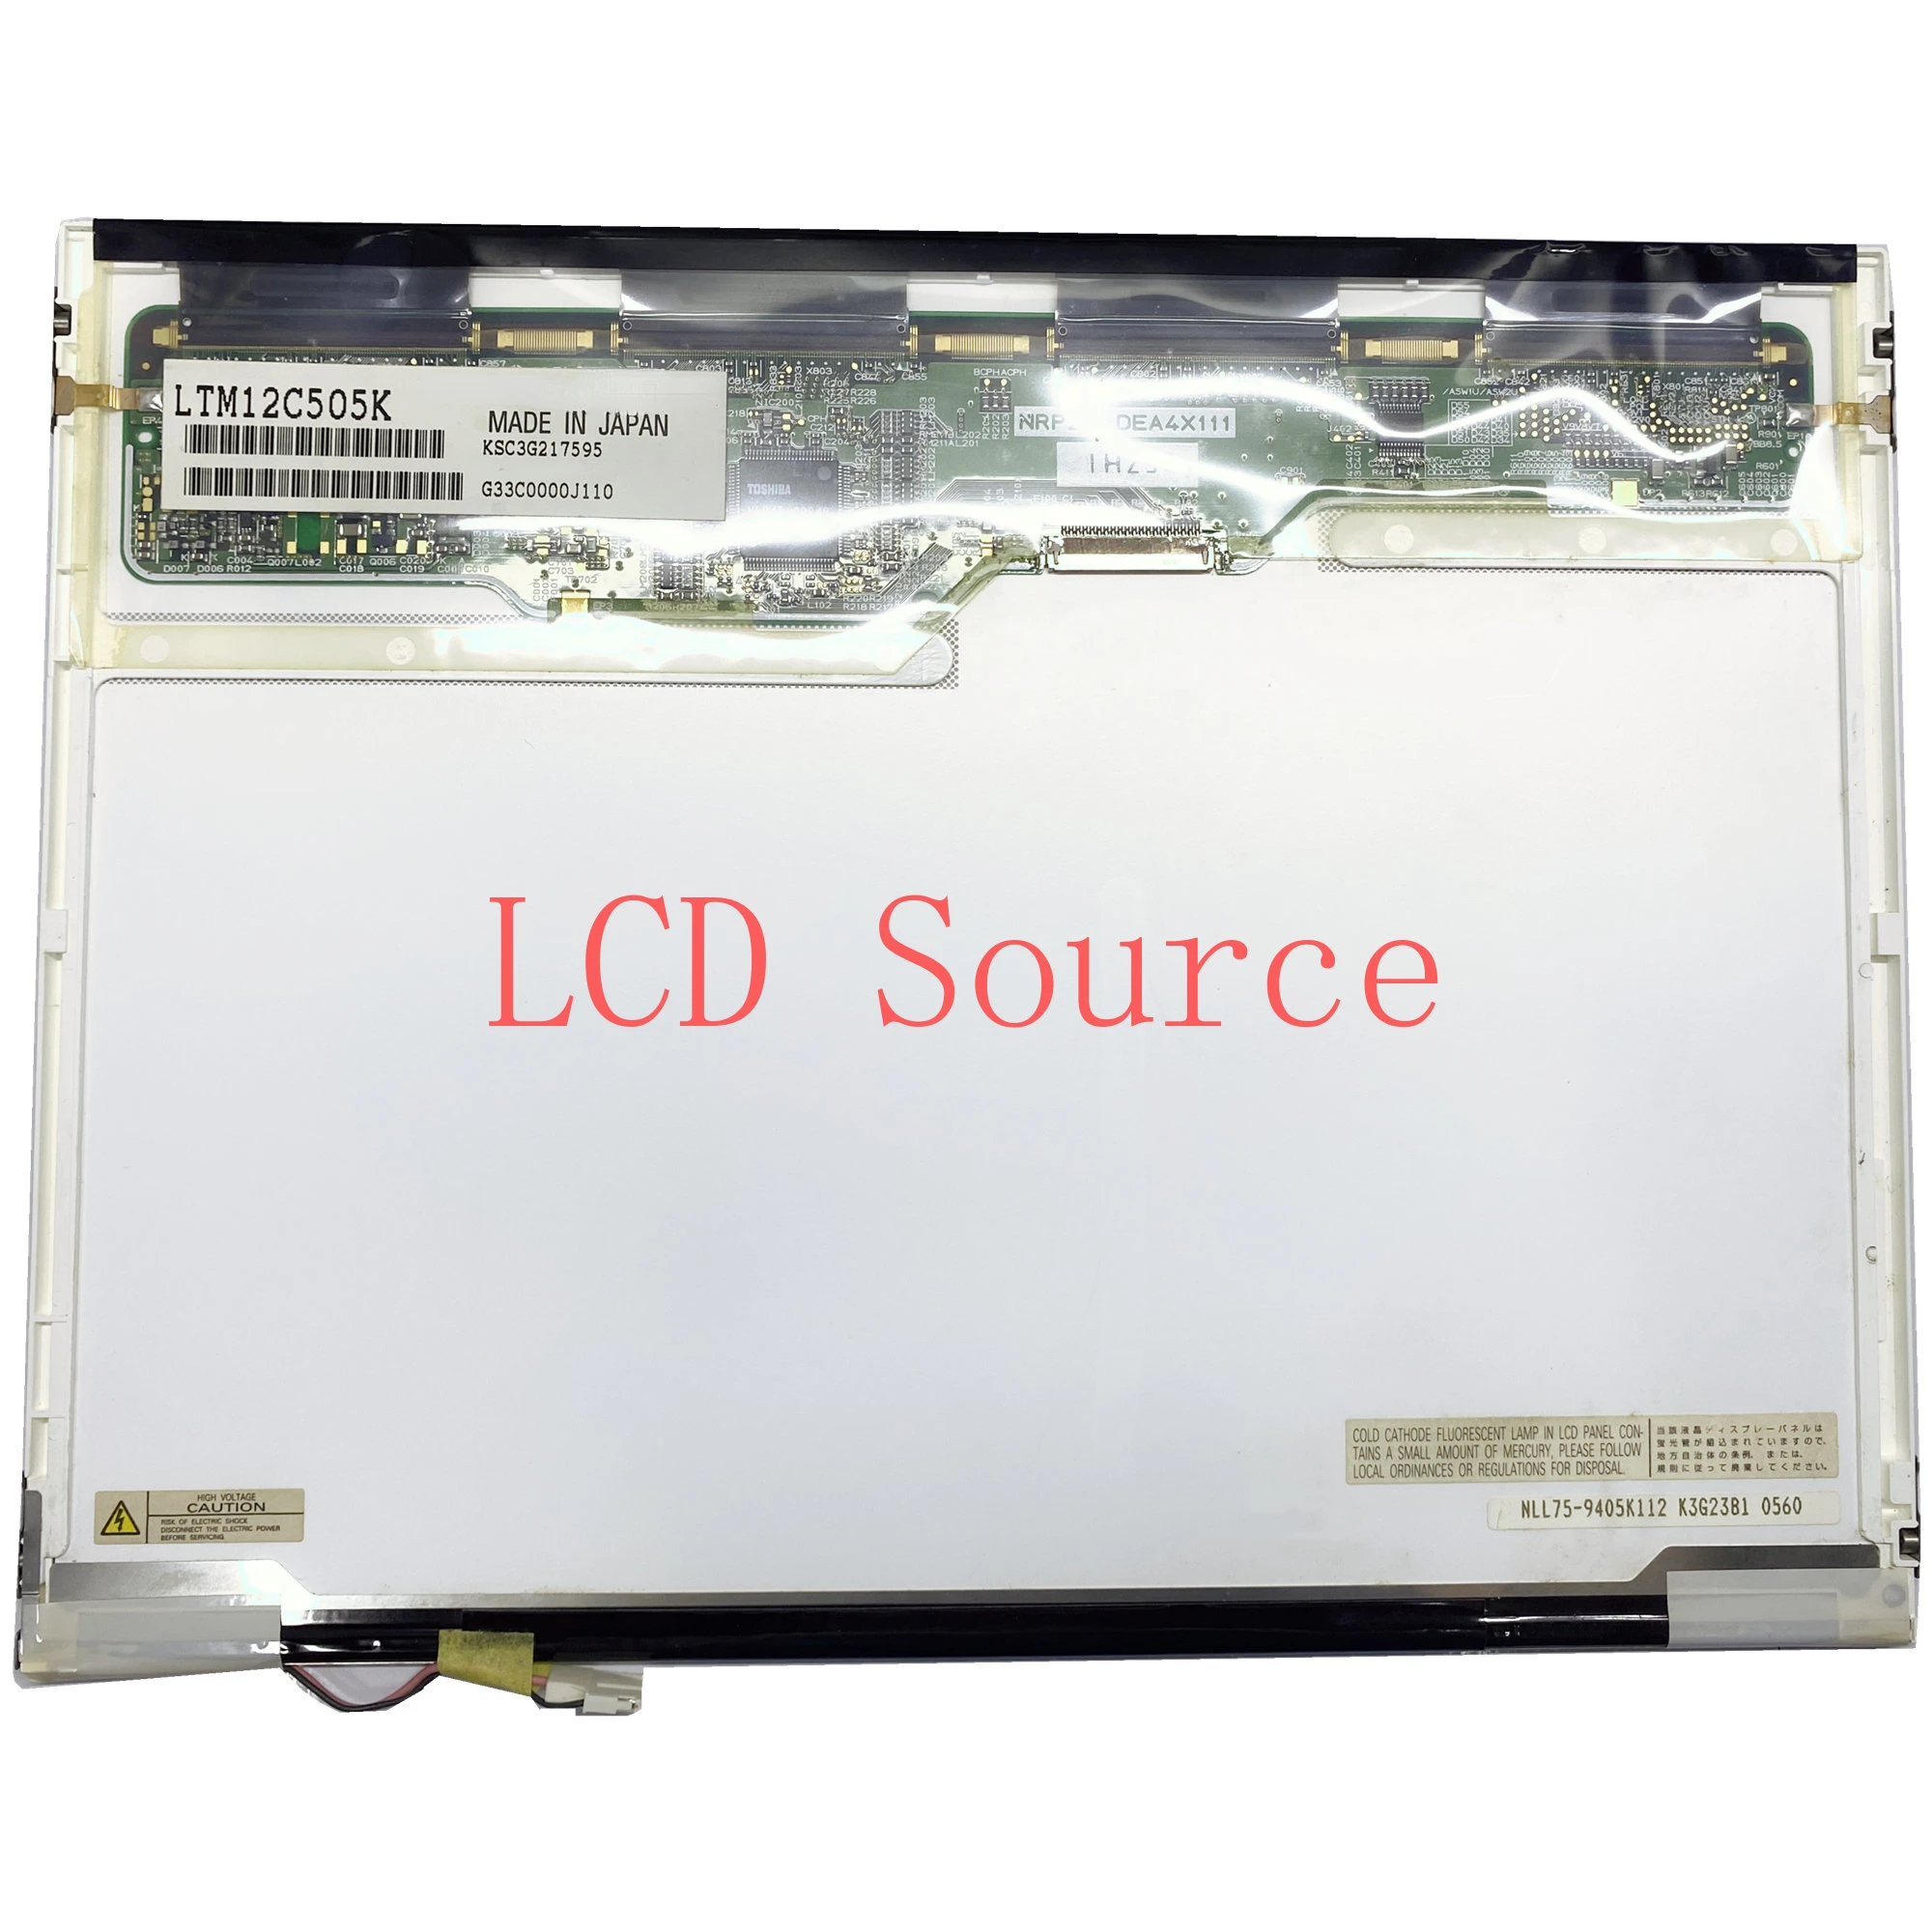 LTM12C505K LTM12C505 LTM12C505A LTD121EA6F LTM12C505F LTM12C505W LTM12C505V LTM12C505N LTM12C505X 1024×768 Klēpjdatoru LCD Ekrāna